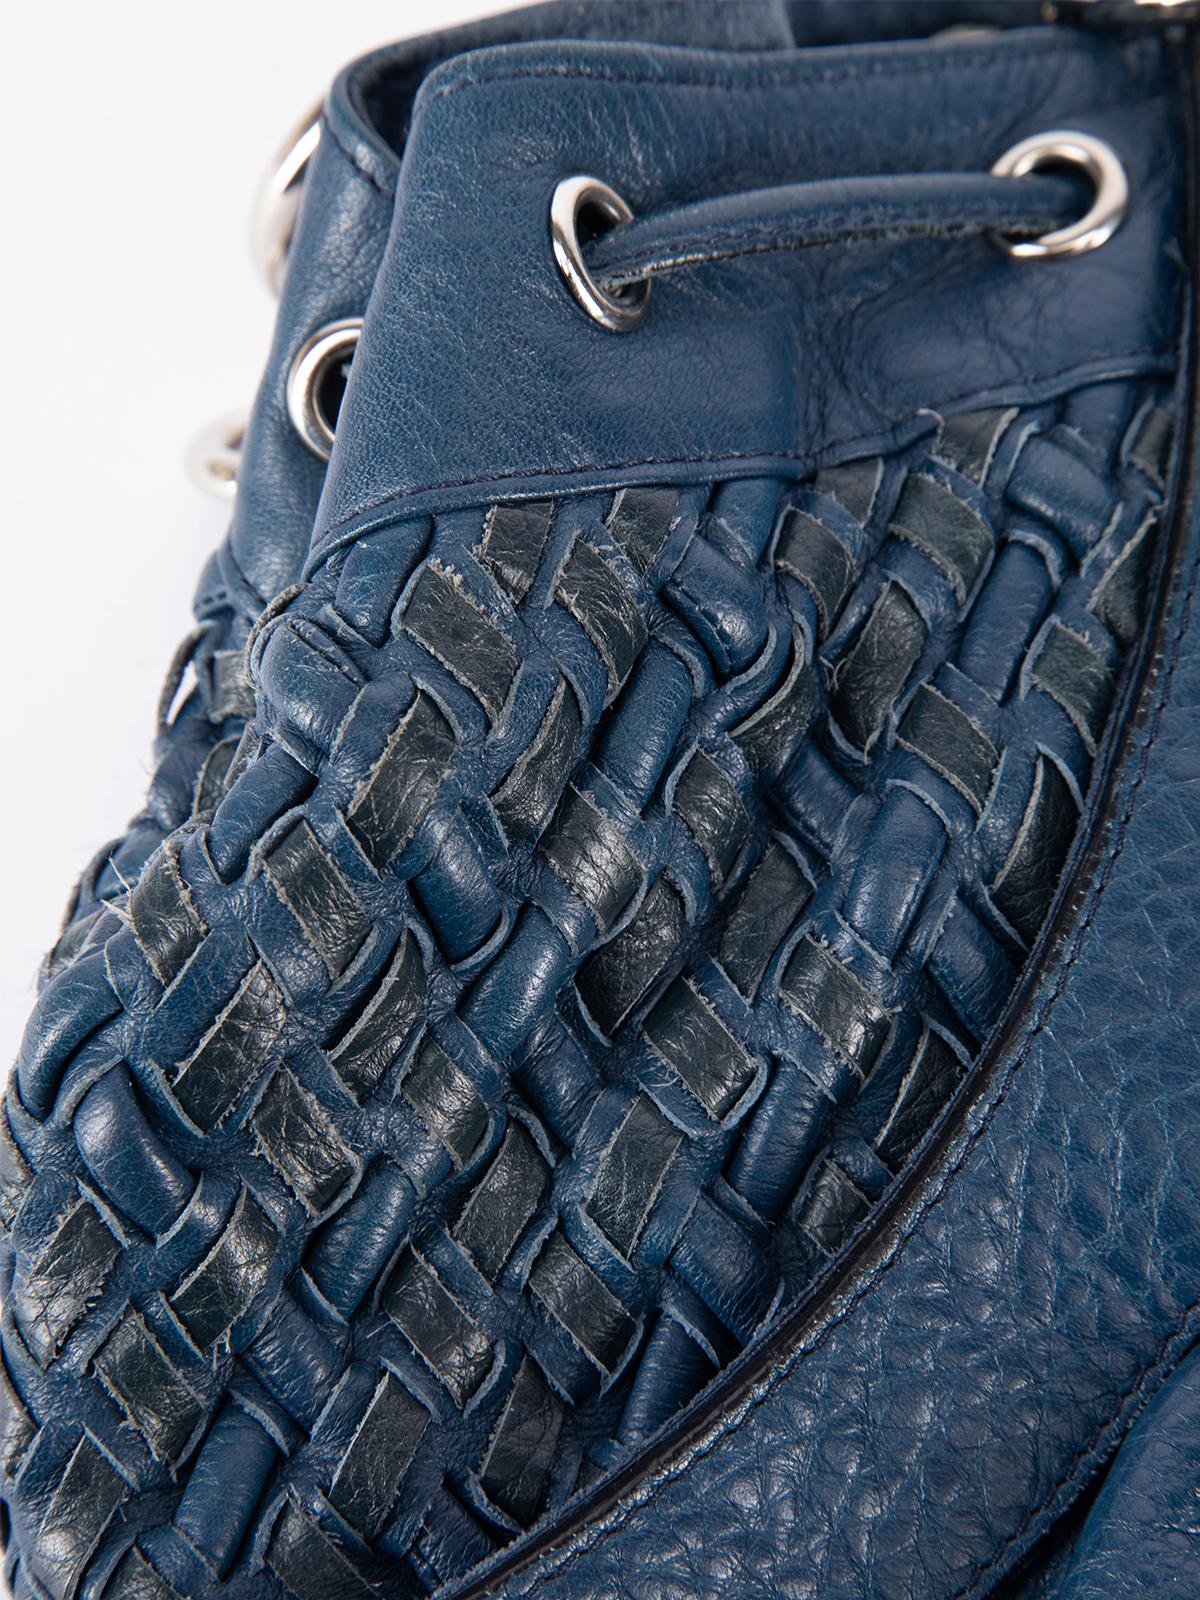 Pre-Loved Zac Posen Women's Blue Leather Woven Shoulder Bag 5